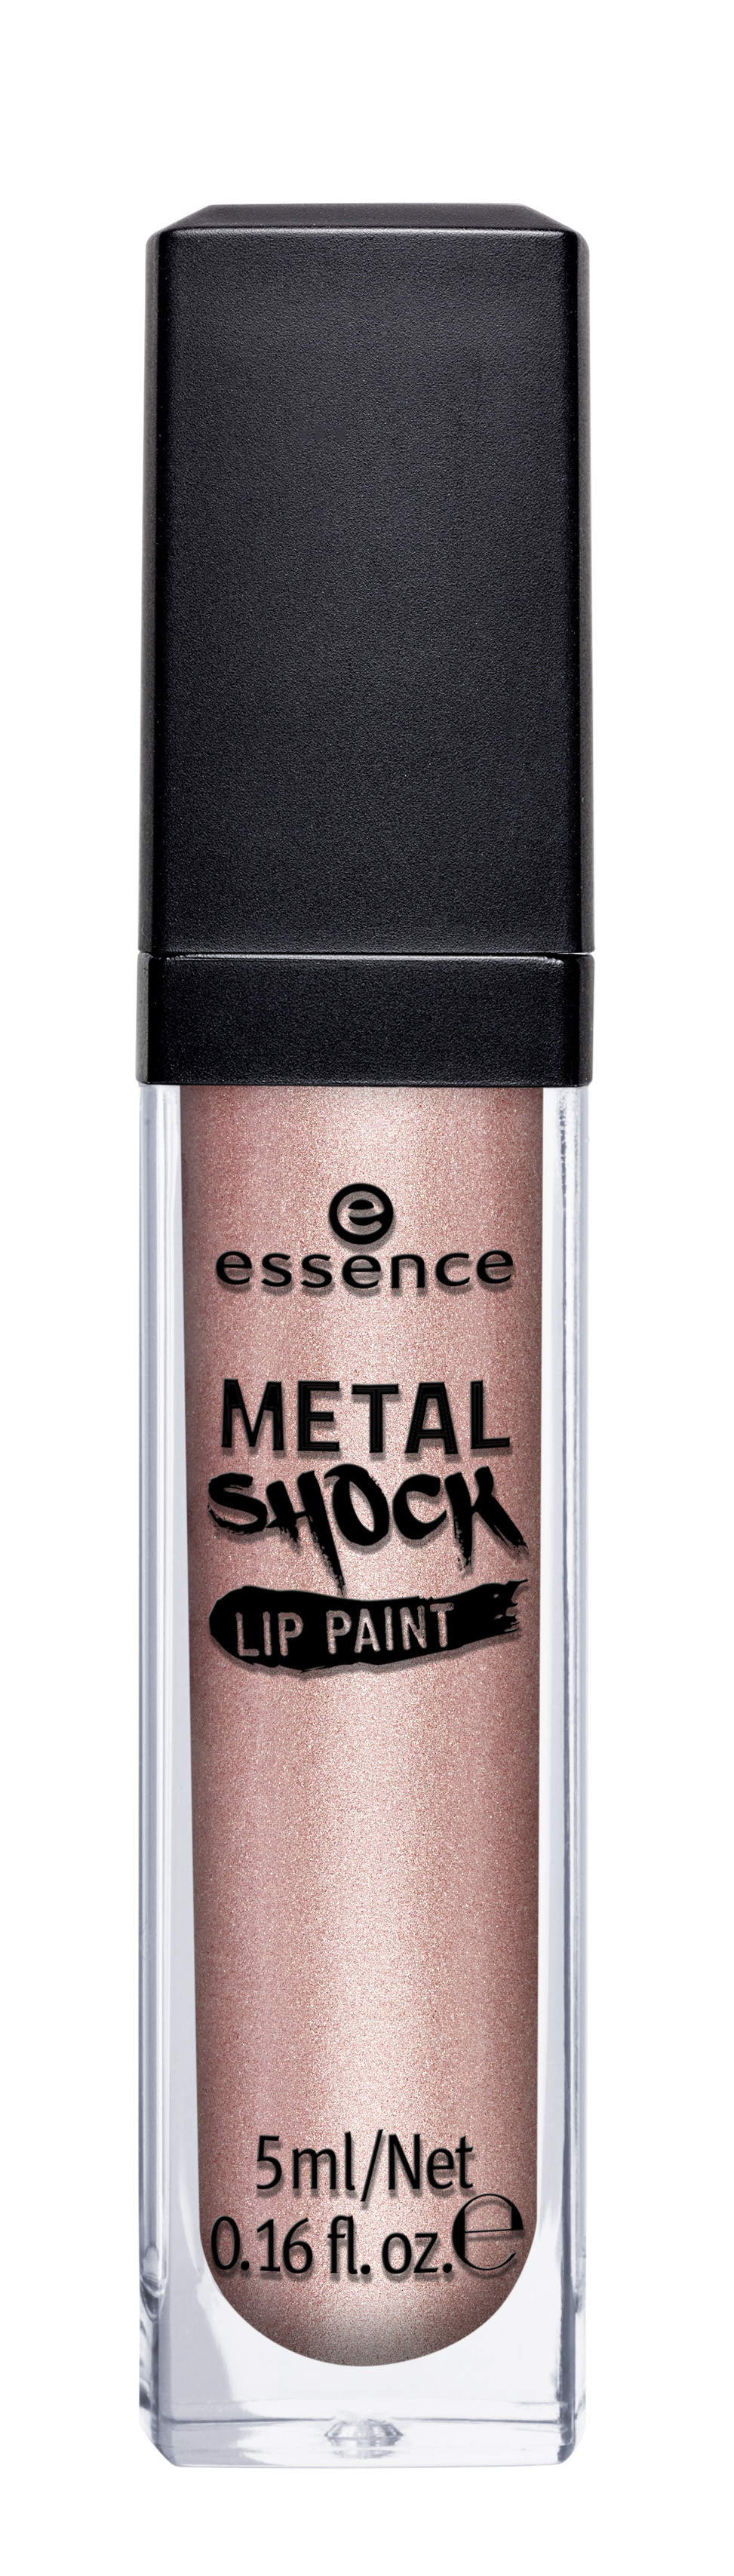 essence metal shock lip paint 04